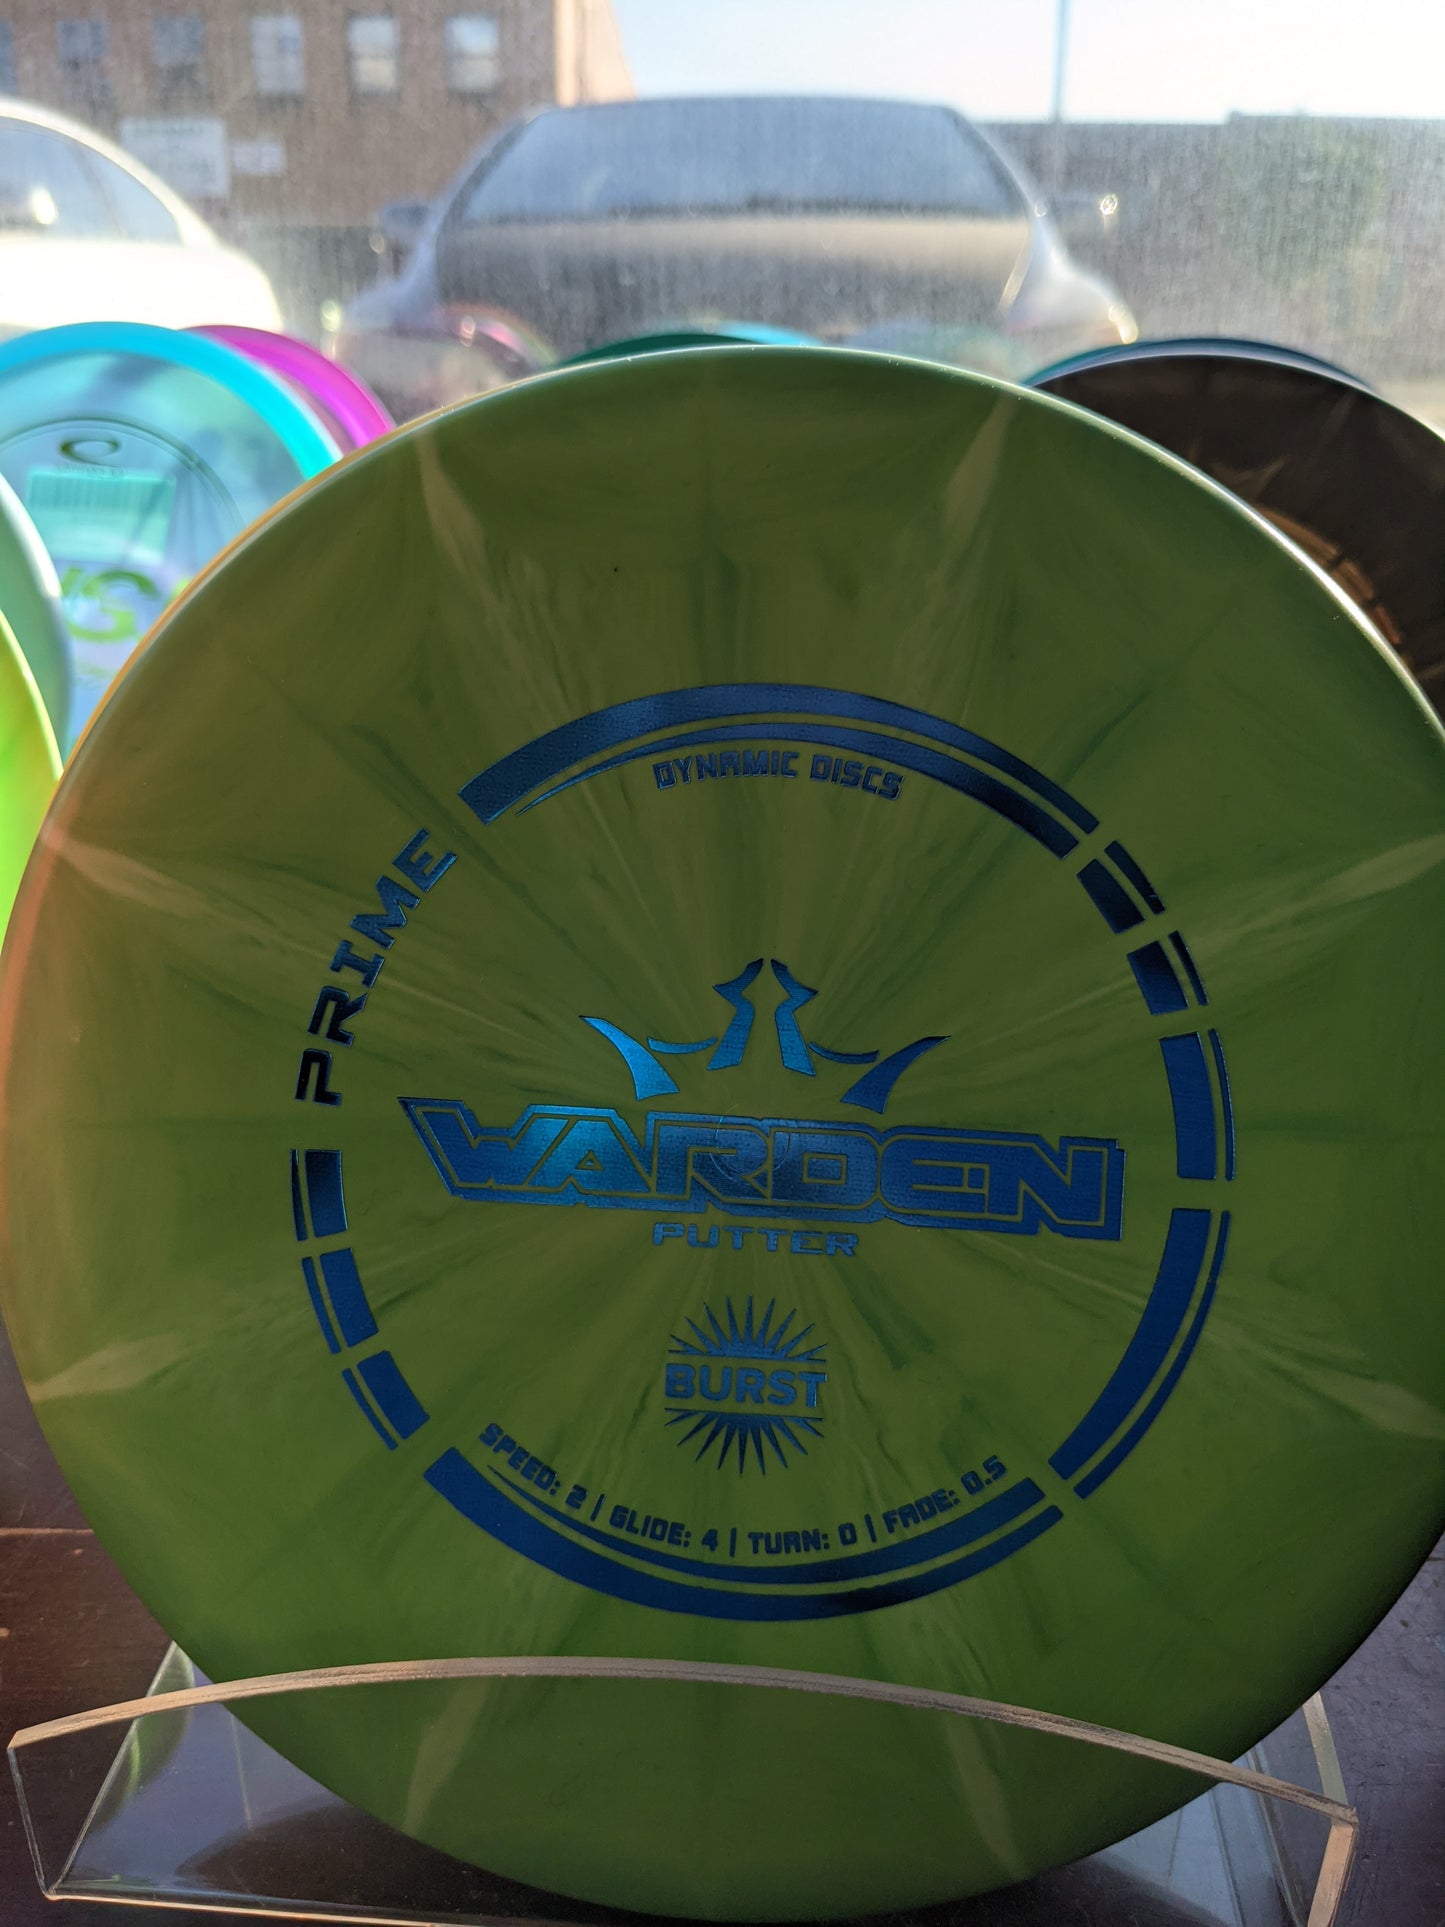 Dynamic Discs Prime Burst Warden